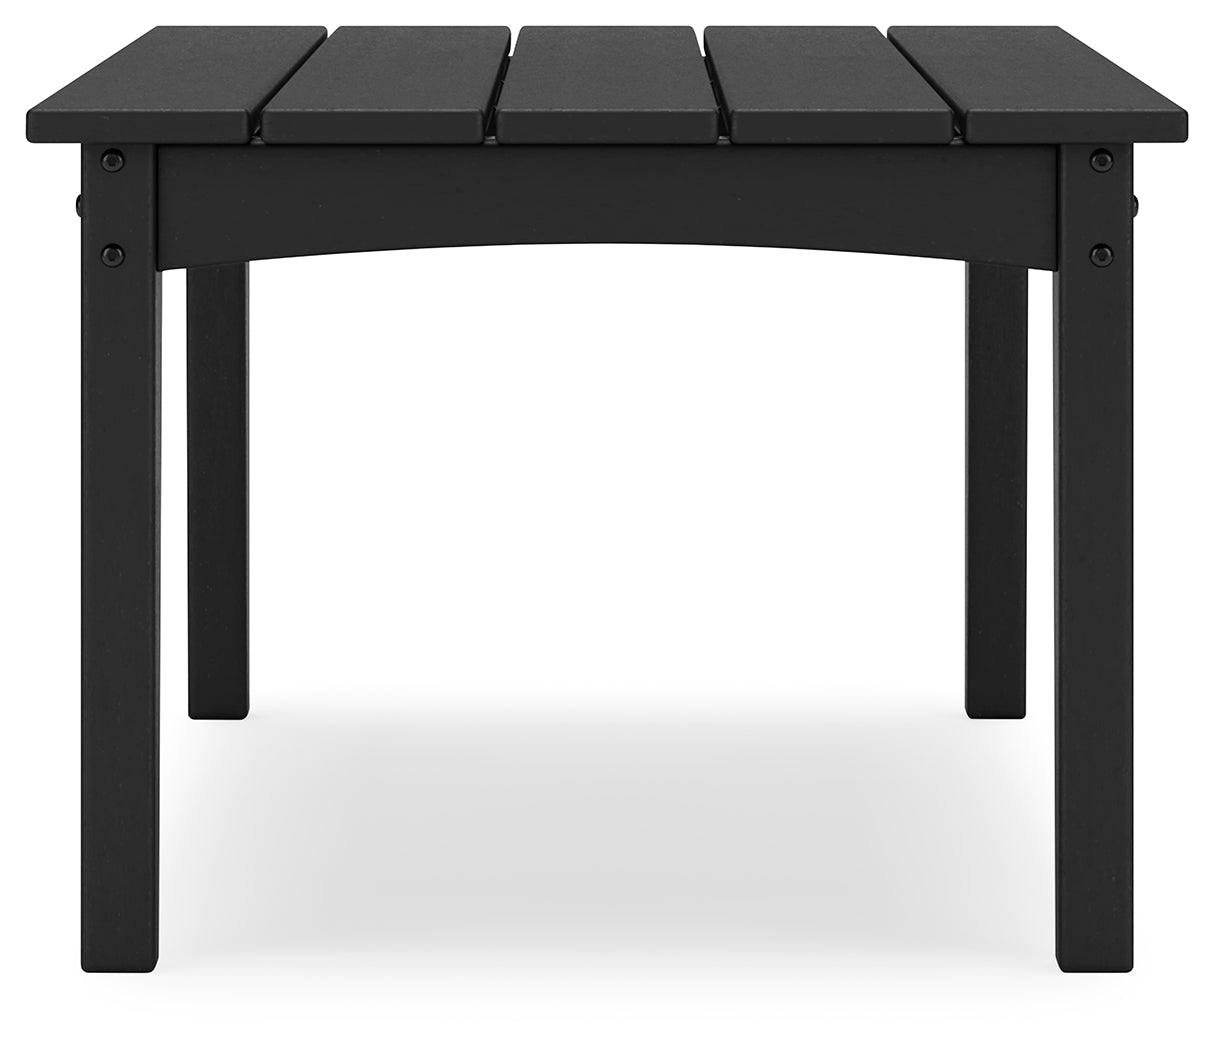 Hyland wave Black Outdoor Coffee Table - P108-701 - Luna Furniture